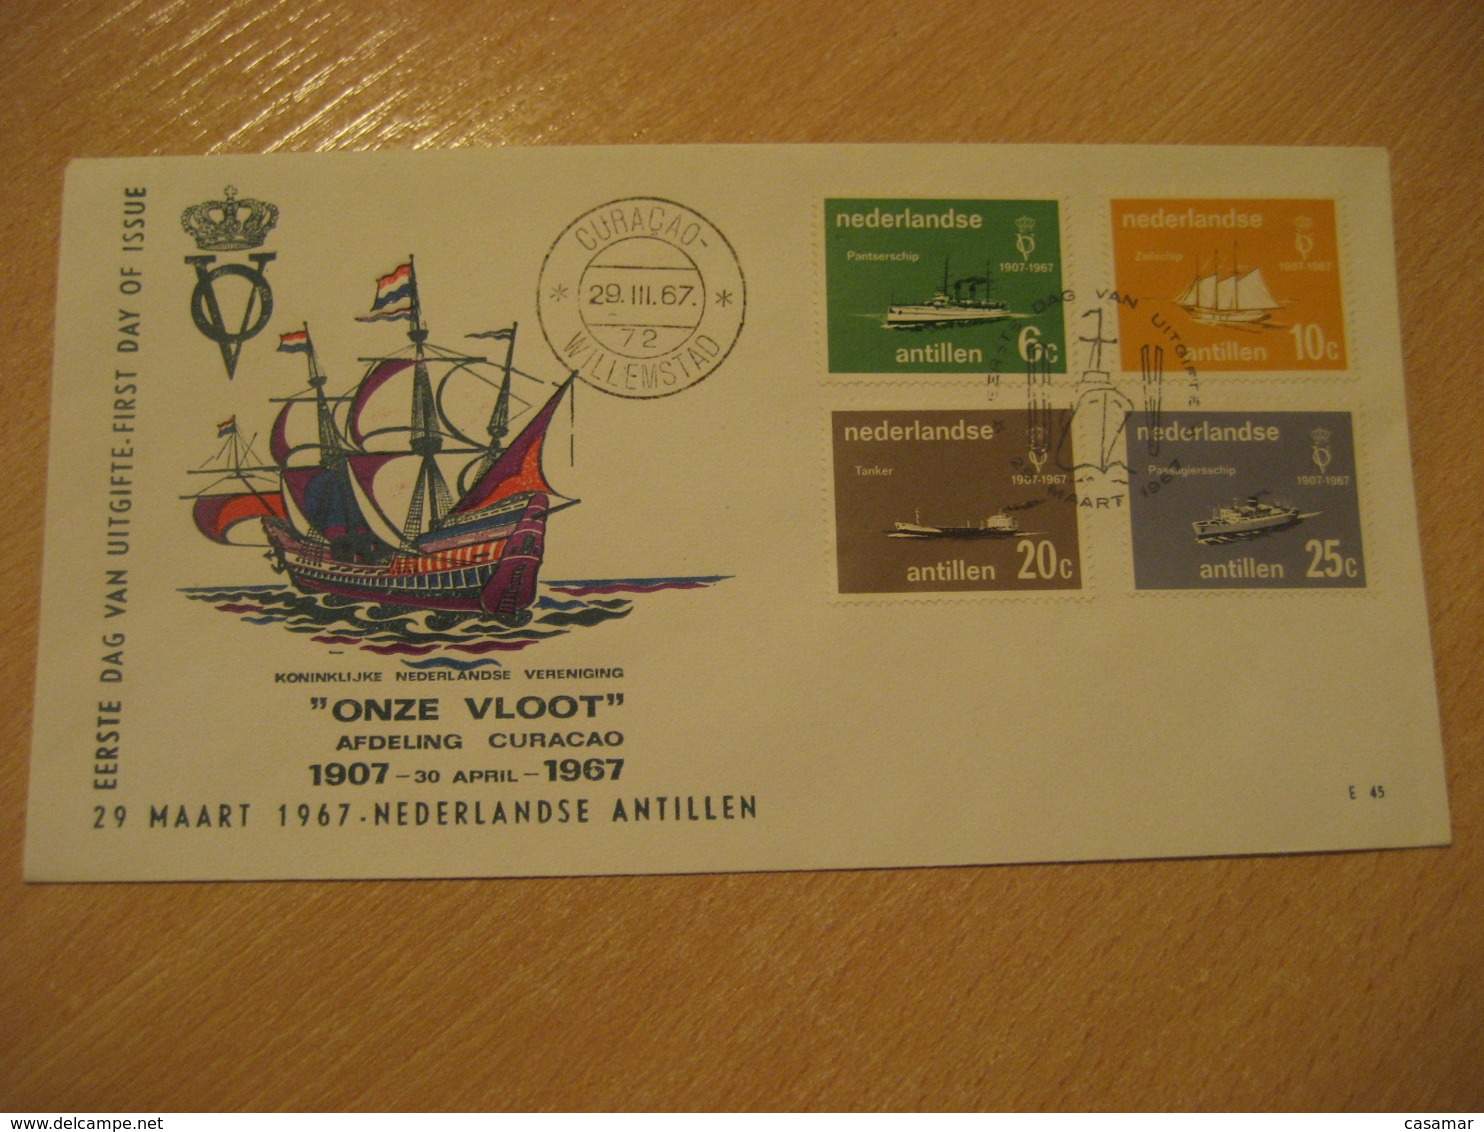 Netherlands Antilles Curaçao Willemstad 1967 Our Fleet FDC Cancel Cover West Indies - Antillen